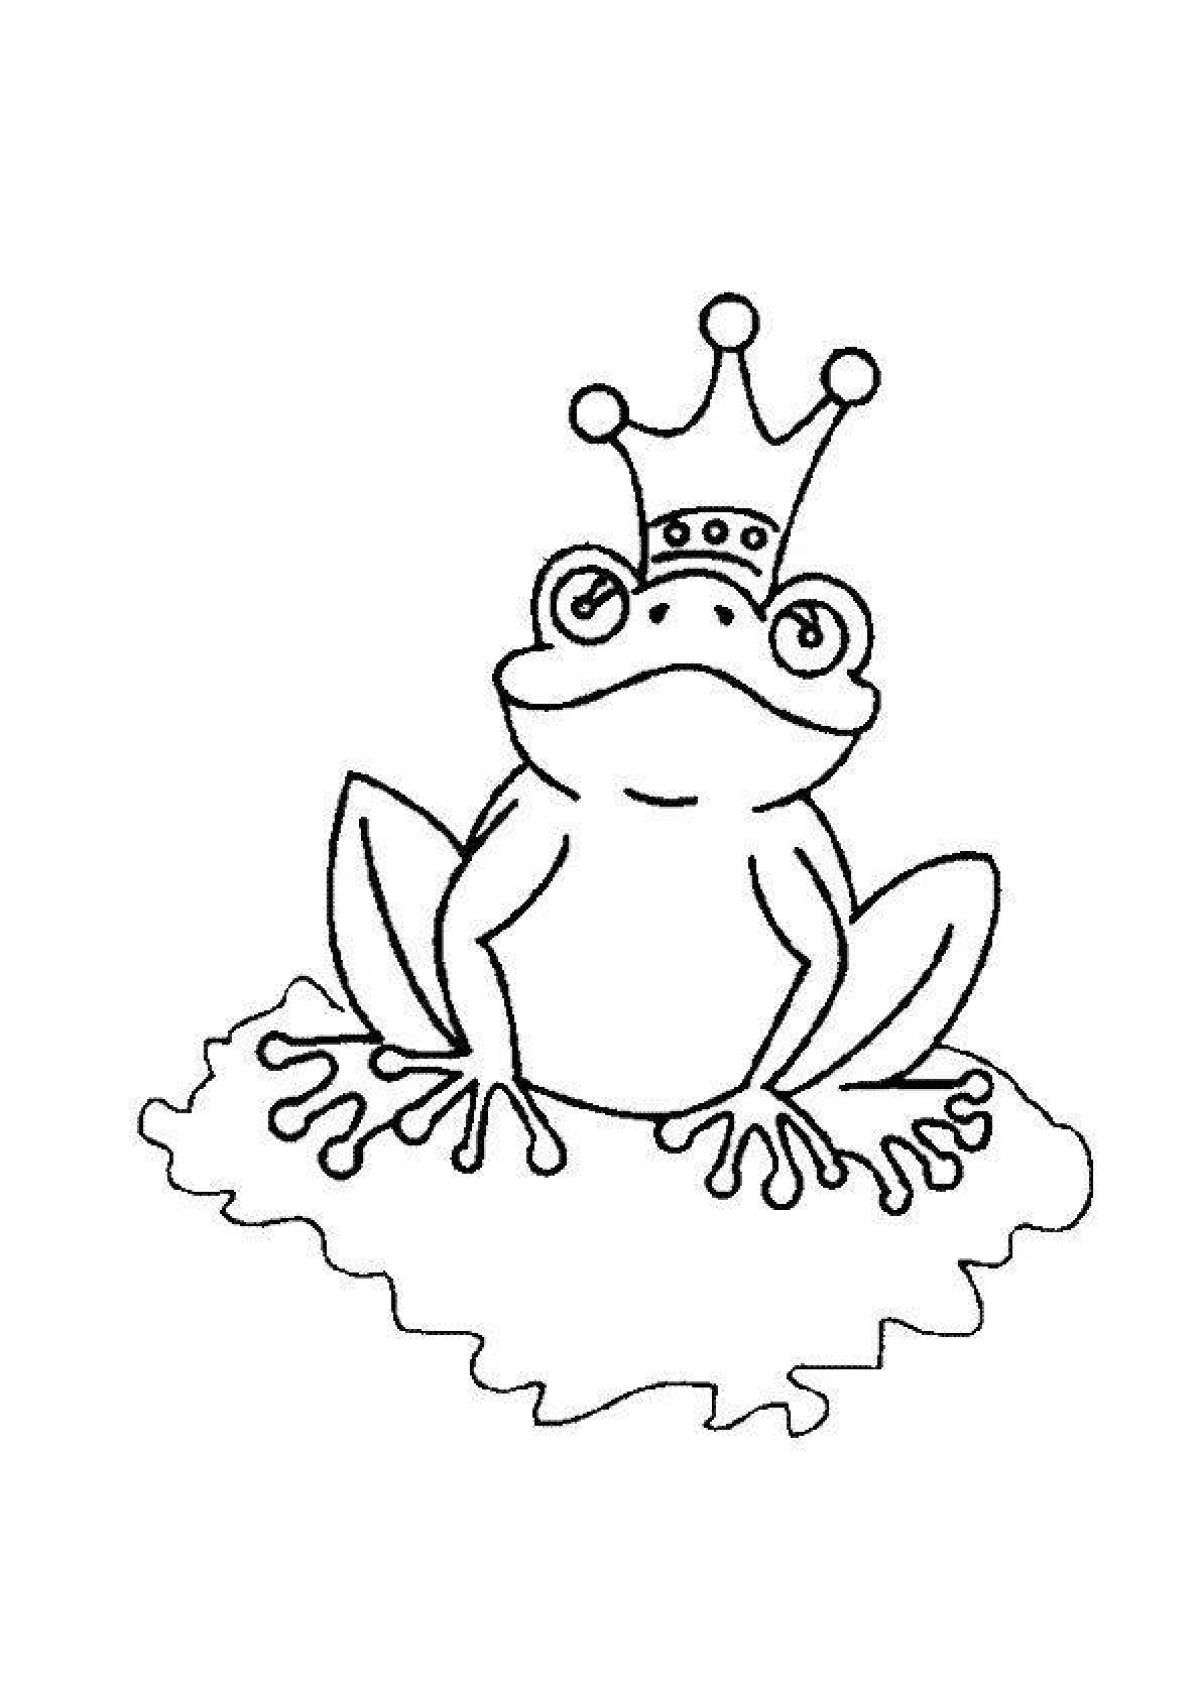 Царевна лягушка рисунок для детей раскраска